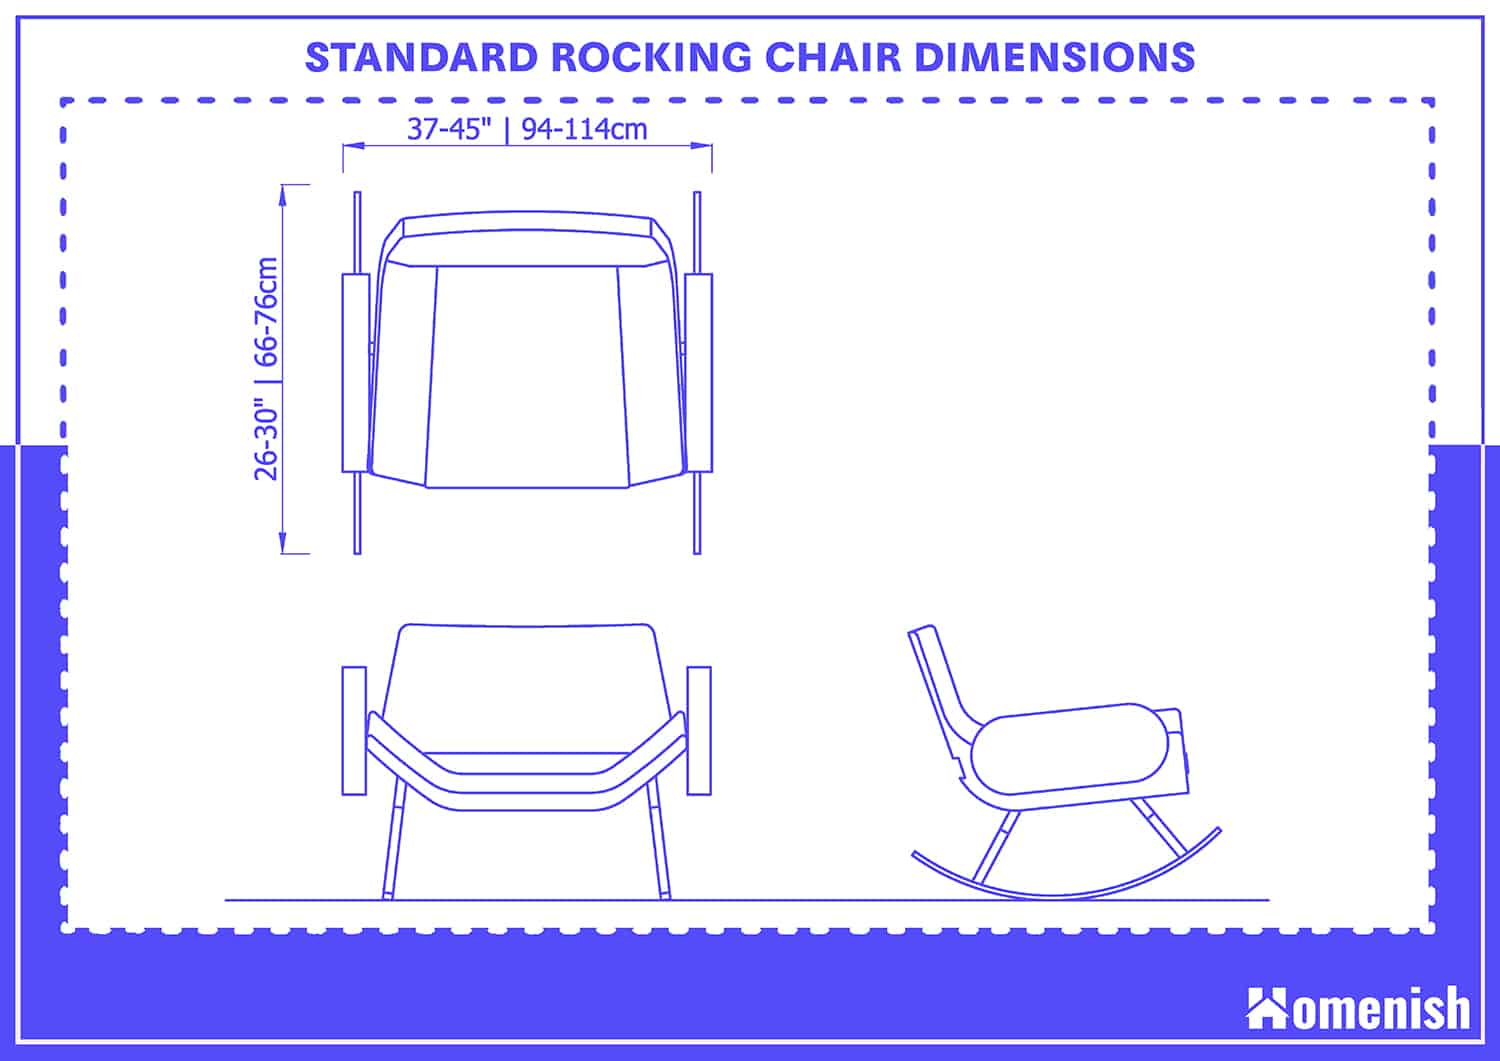 Standard Rocking Chair Dimensions